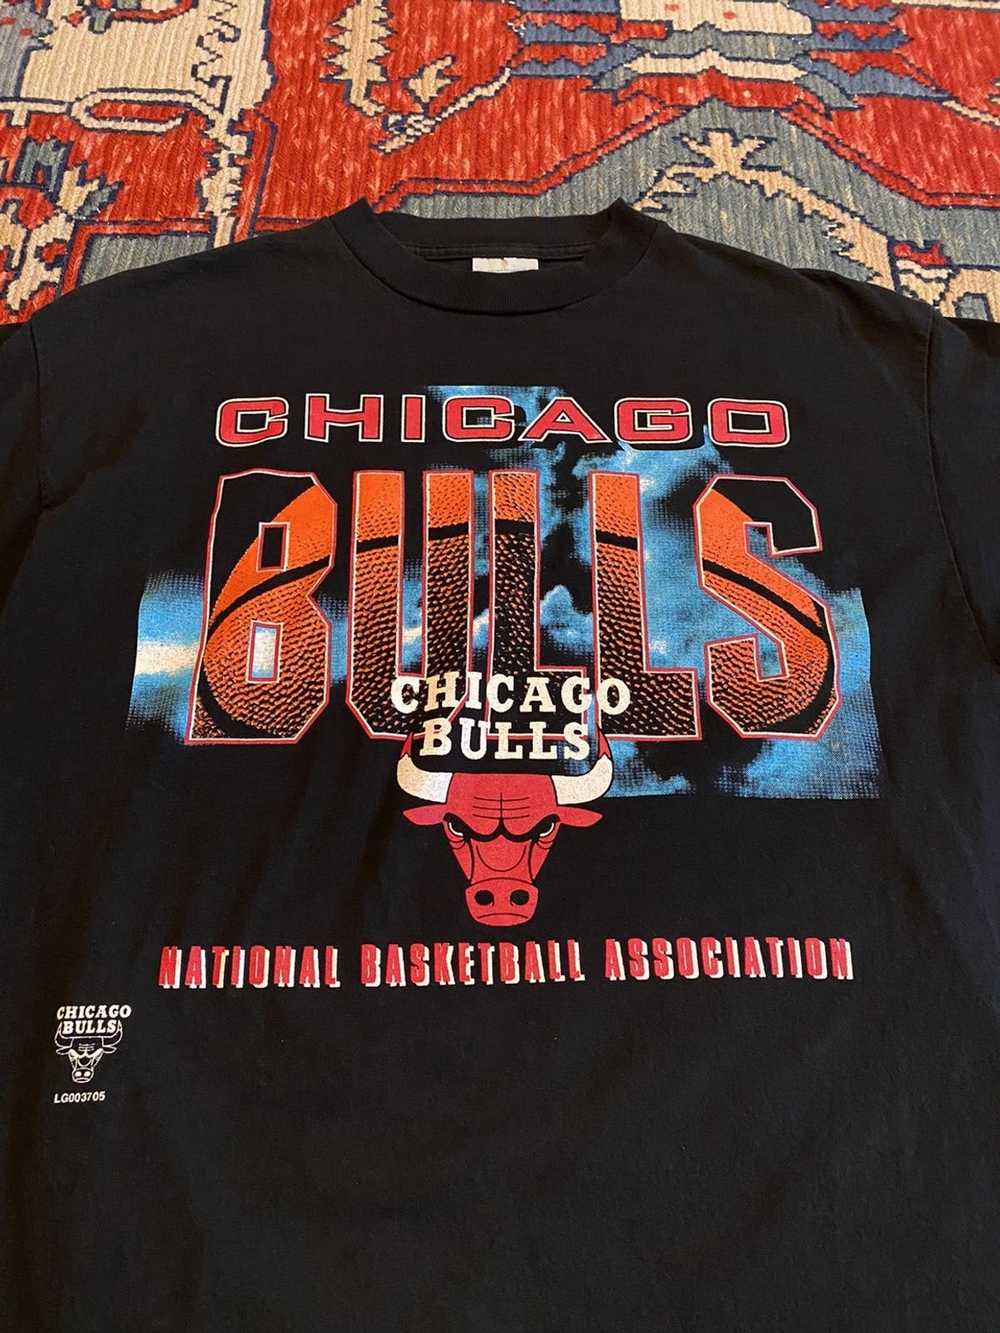 Vintage 1990s Chicago White Sox T shirt size large Nu… - Gem